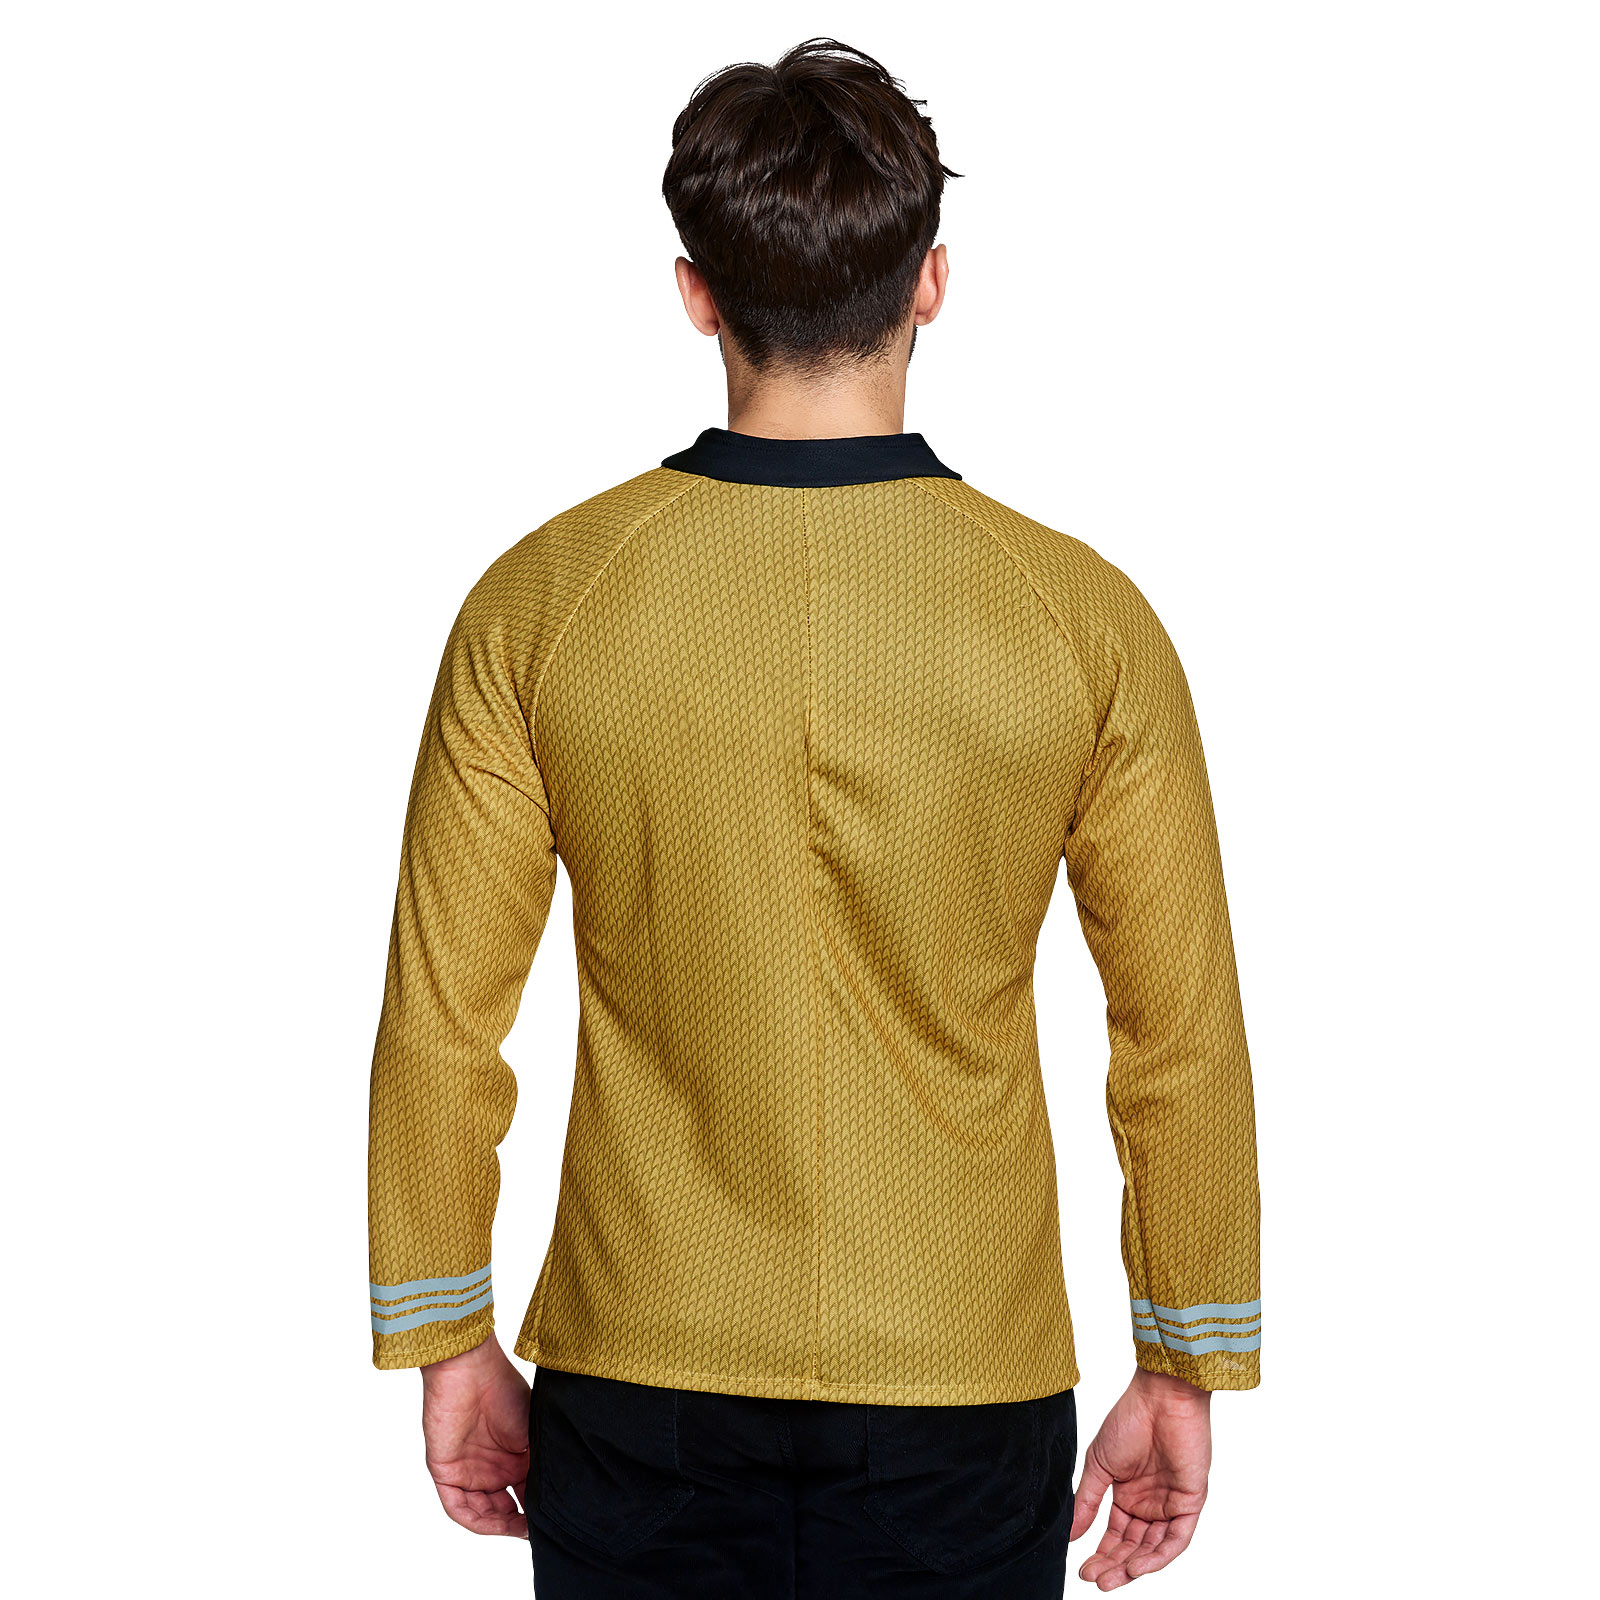 Star Trek - Captain Kirk Film Kostuum Shirt